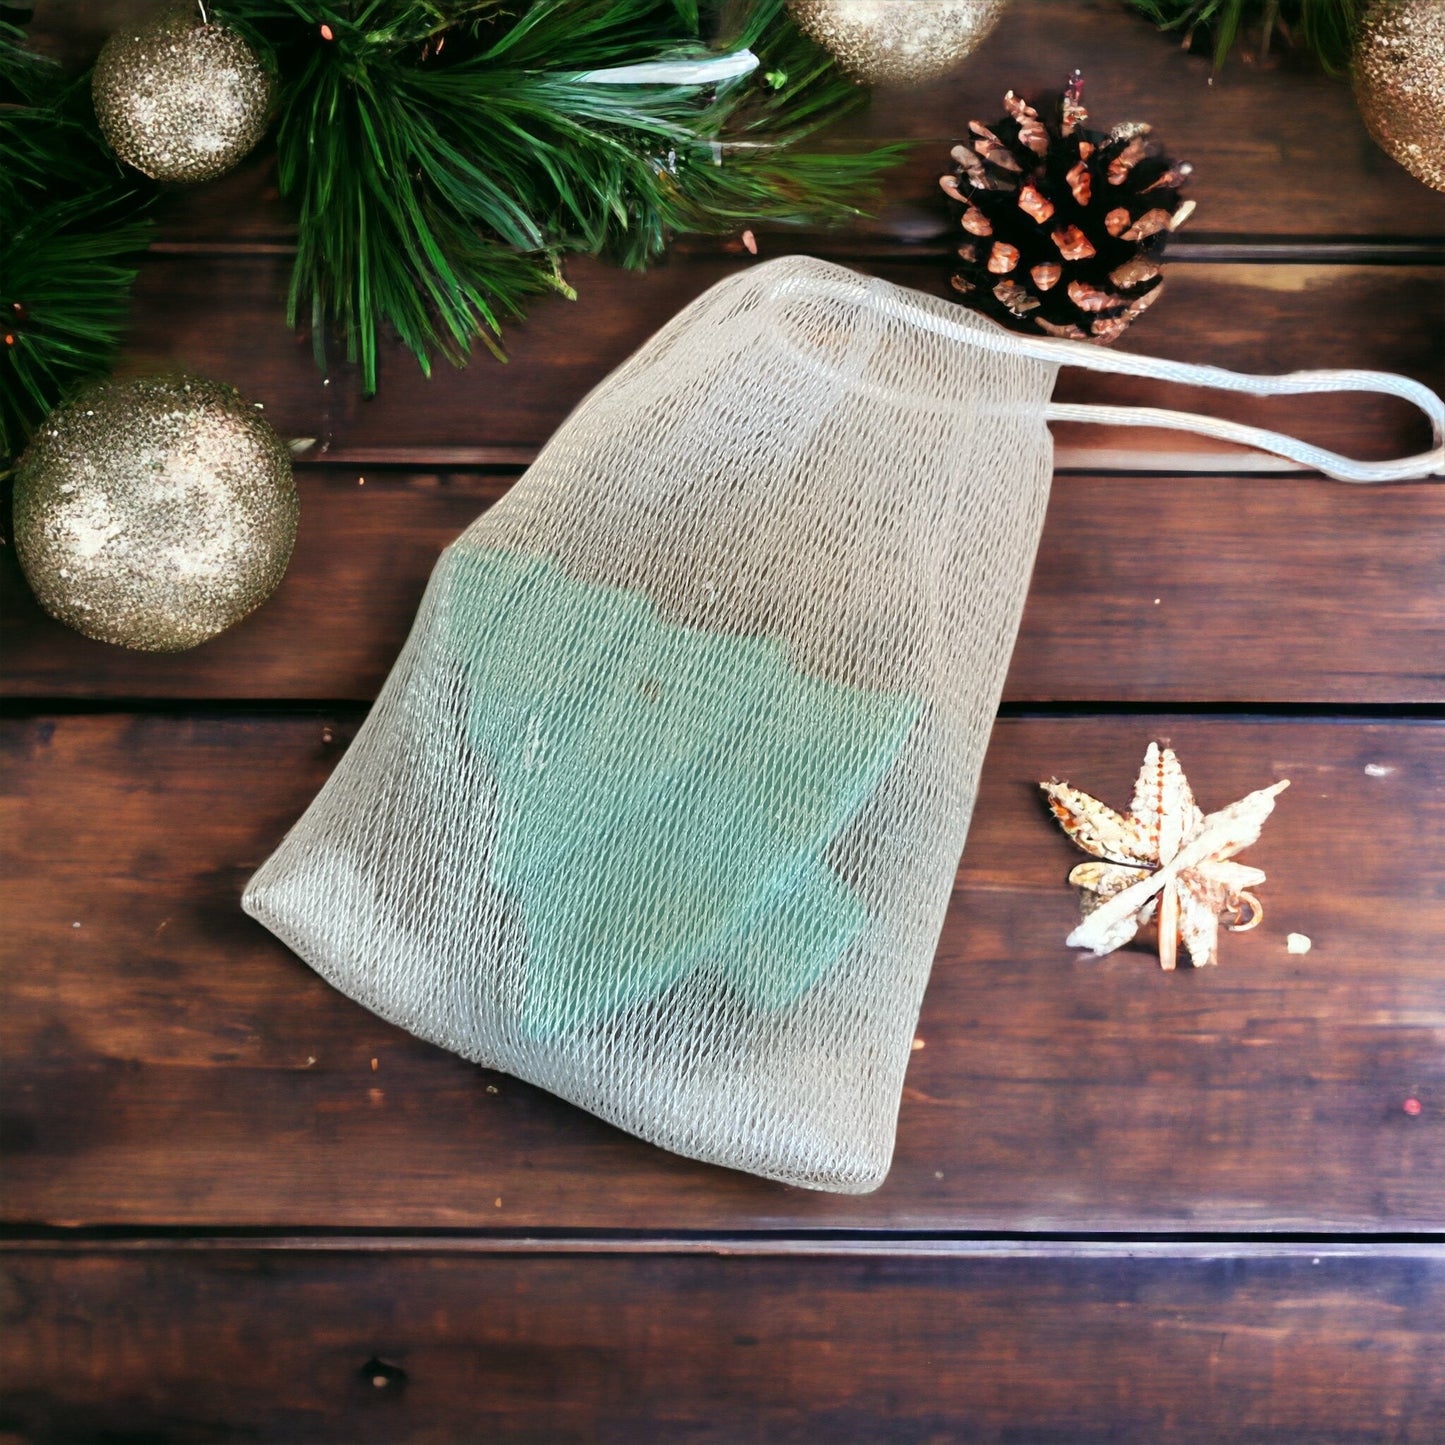 Goat Milk Soap | Balsam Fir Christmas Tree Soap | Handmade, Handcrafted Soap